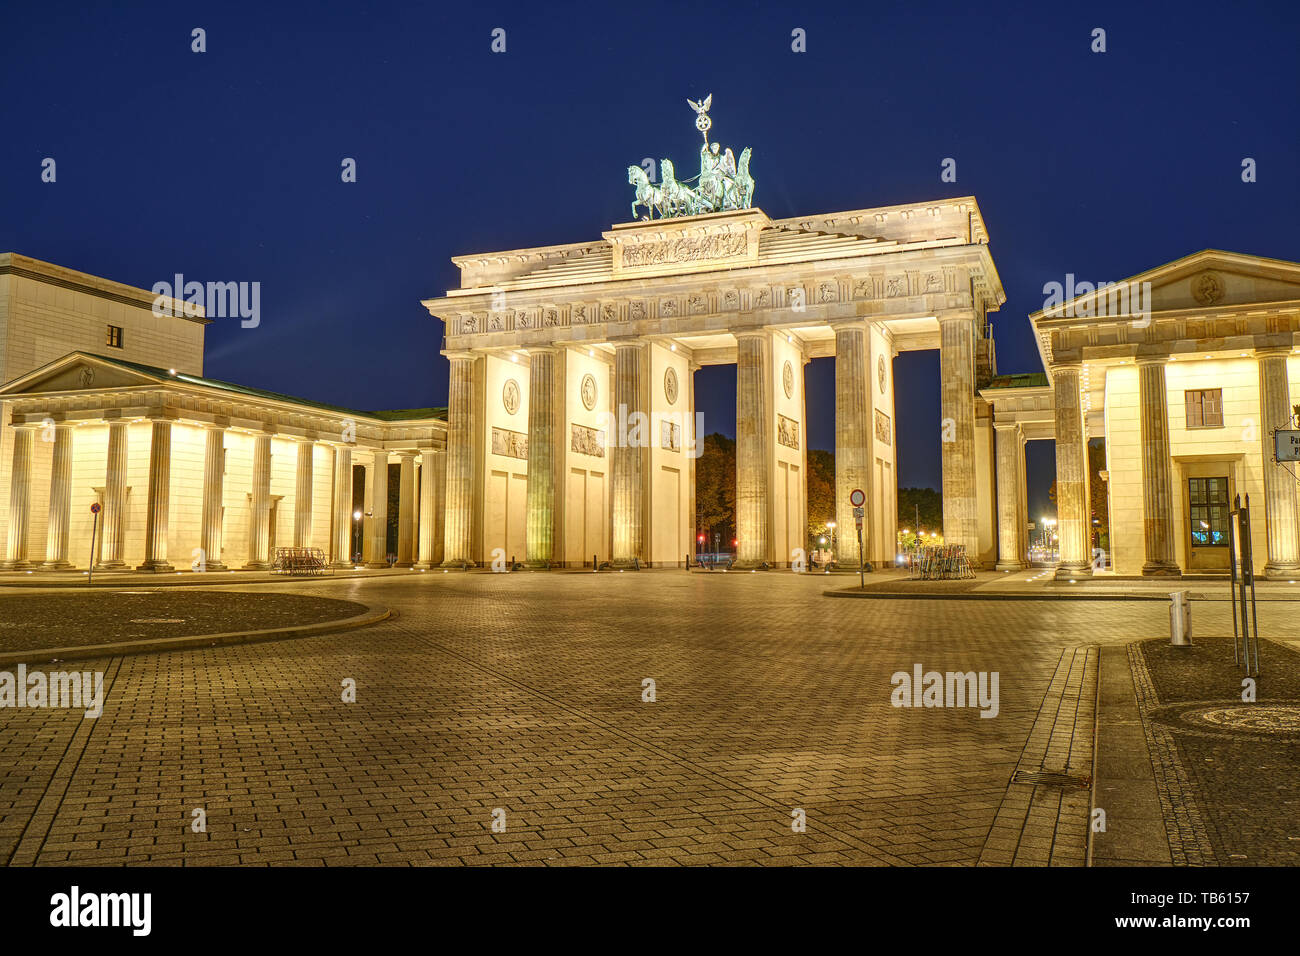 The famous Brandenburger Tor in Berlin illuminated at dawn Stock Photo